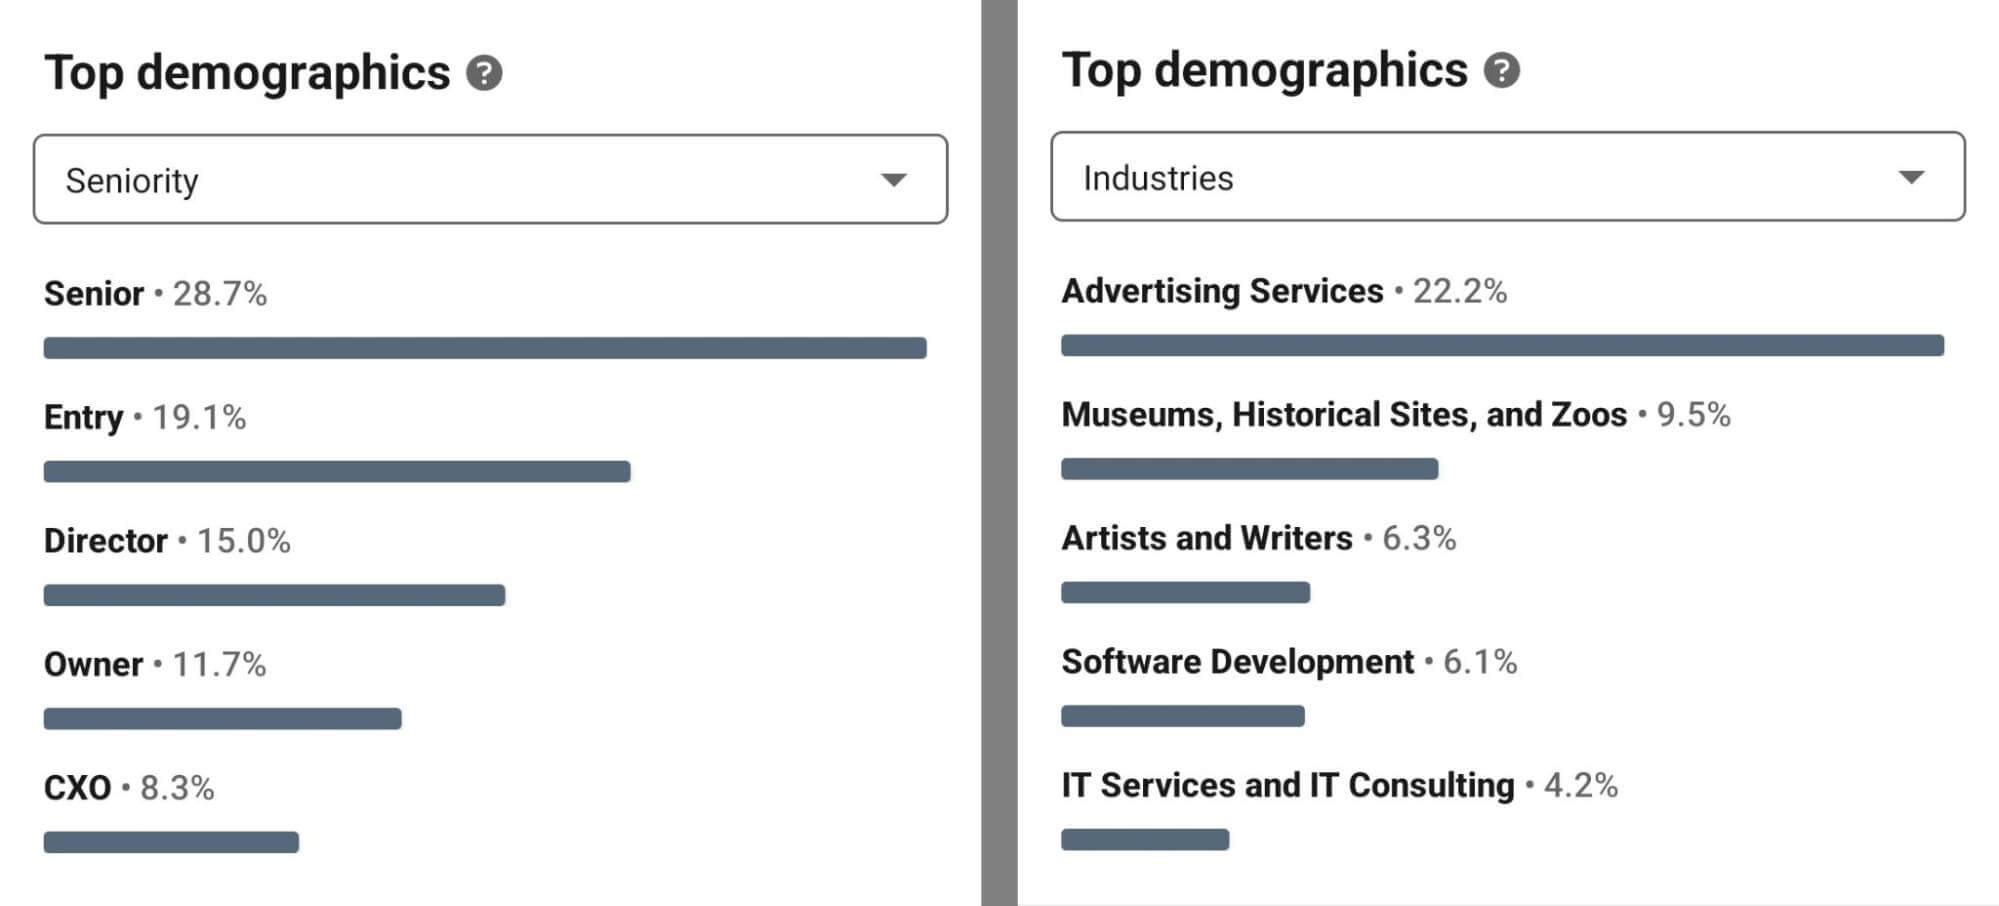 linkedin-creator-analytics-top-demographics-6